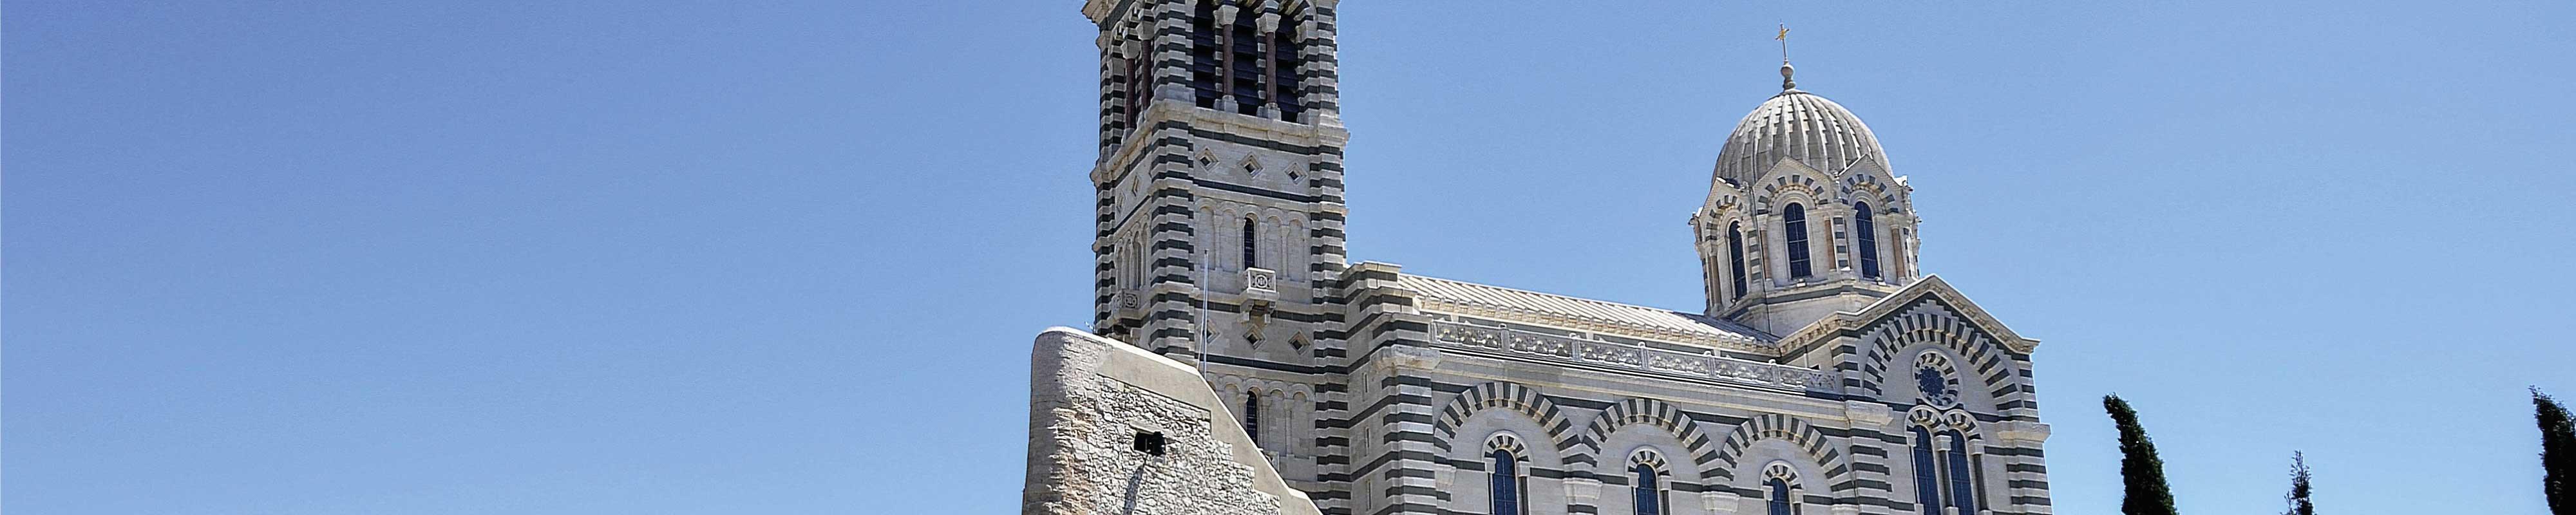 Luggage Storage | Notre Dame de la Garde in Marseille - Nannybag